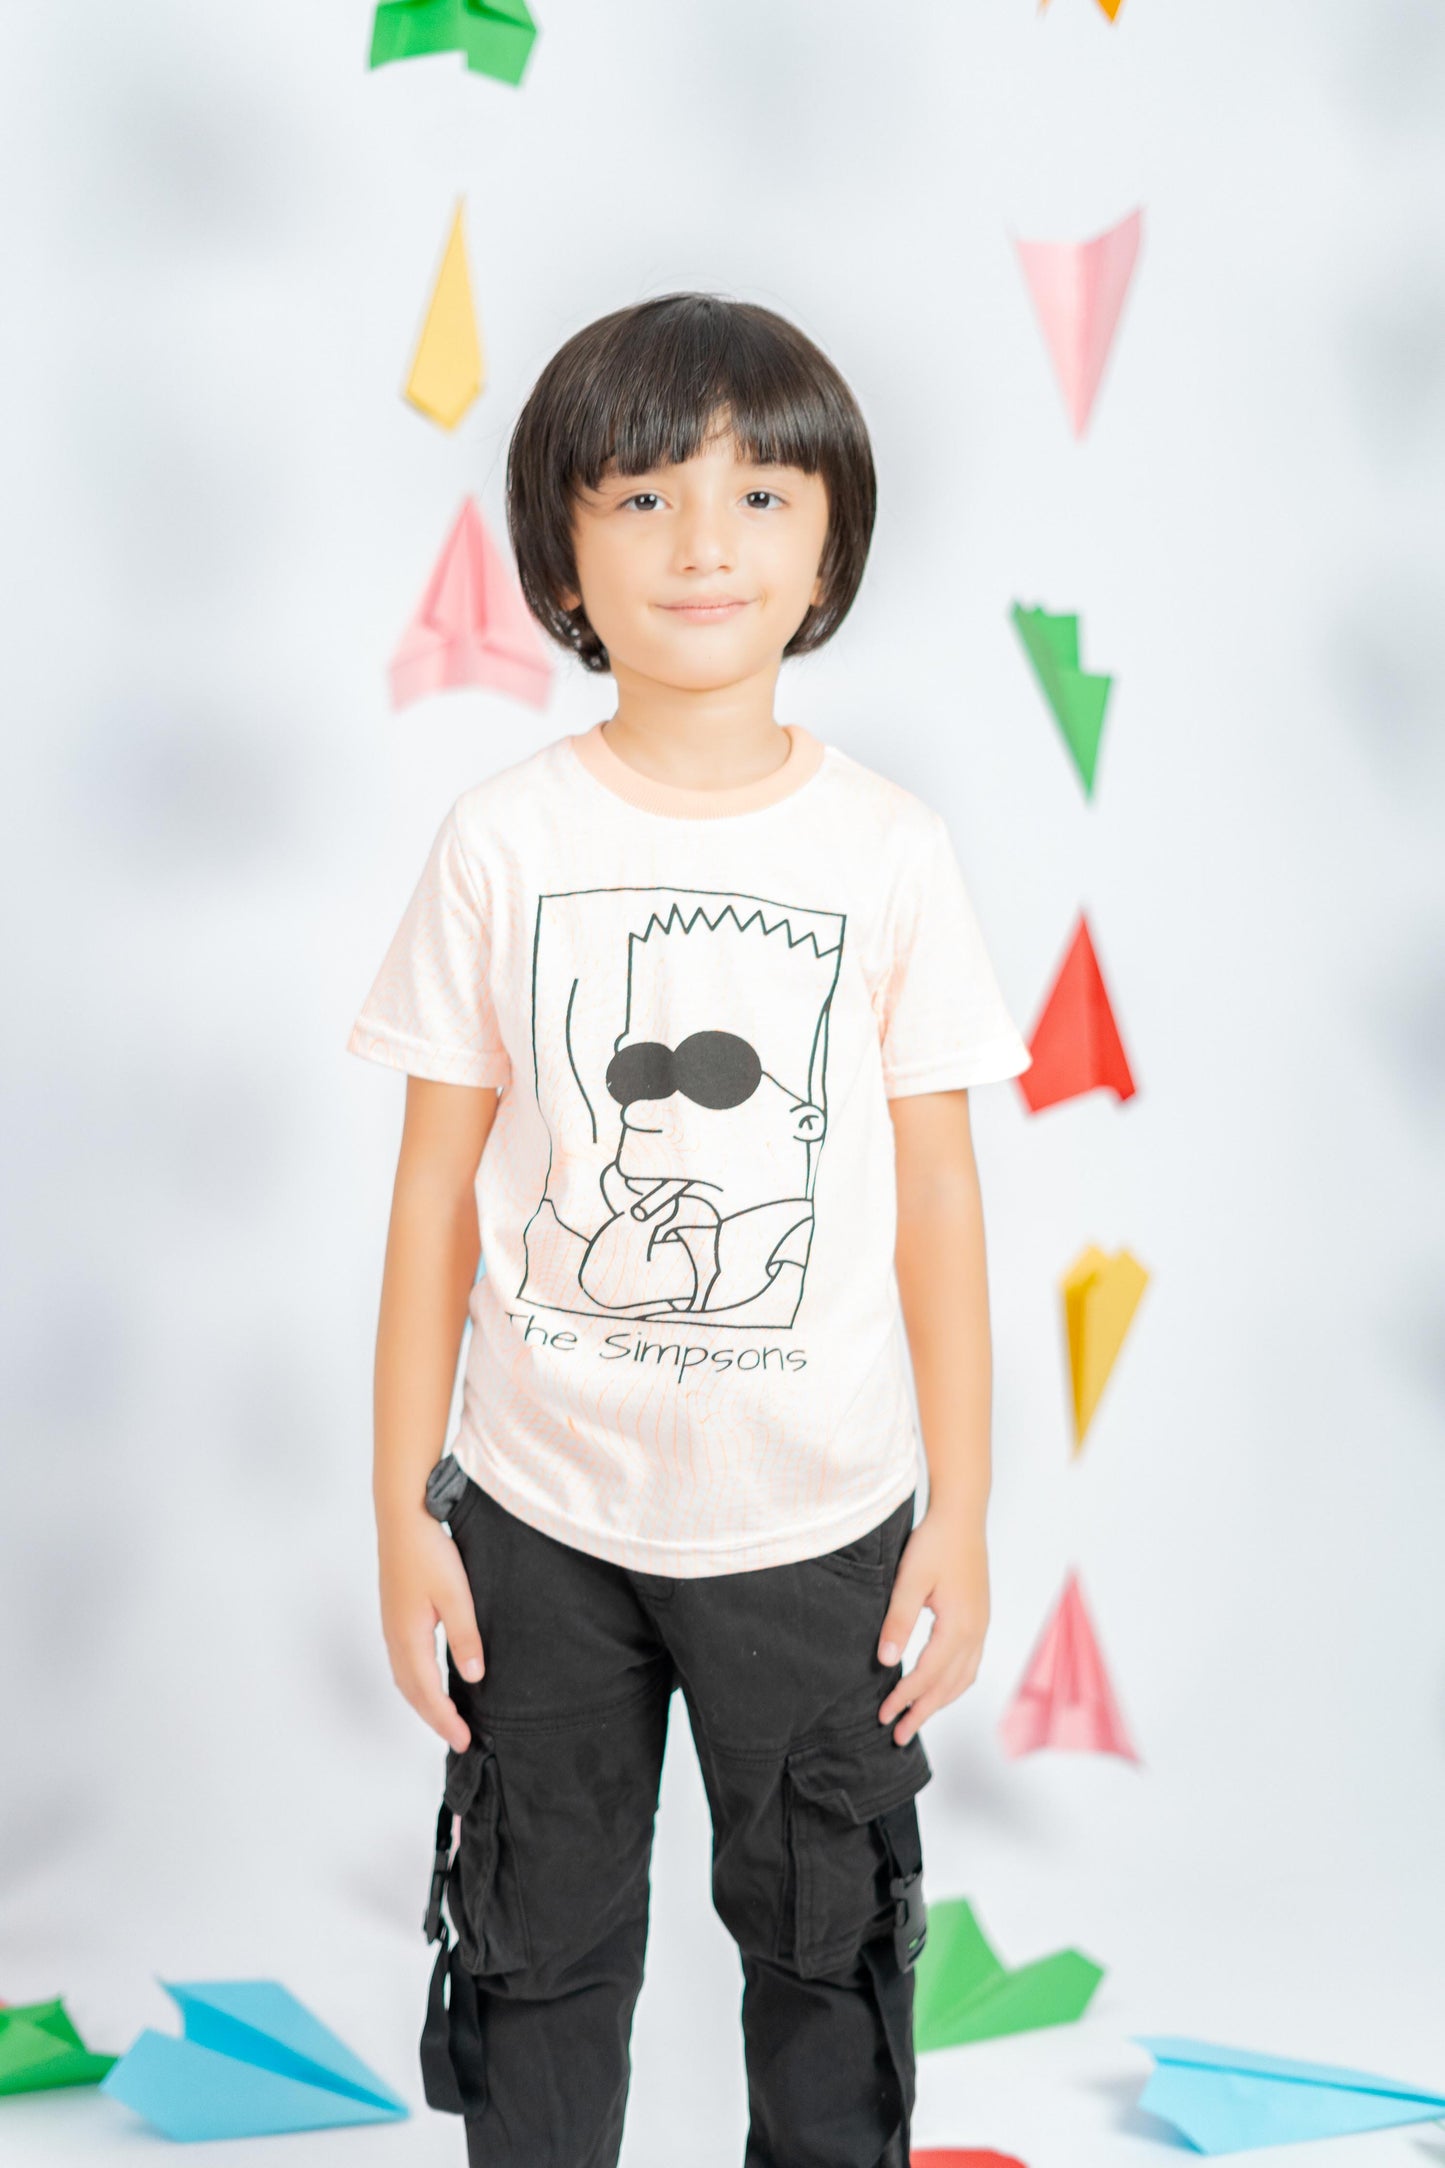 Junior Republic Kid's The Simpsons Printed Tee Shirt Boy's Tee Shirt JRR Orange 1-2 Years 